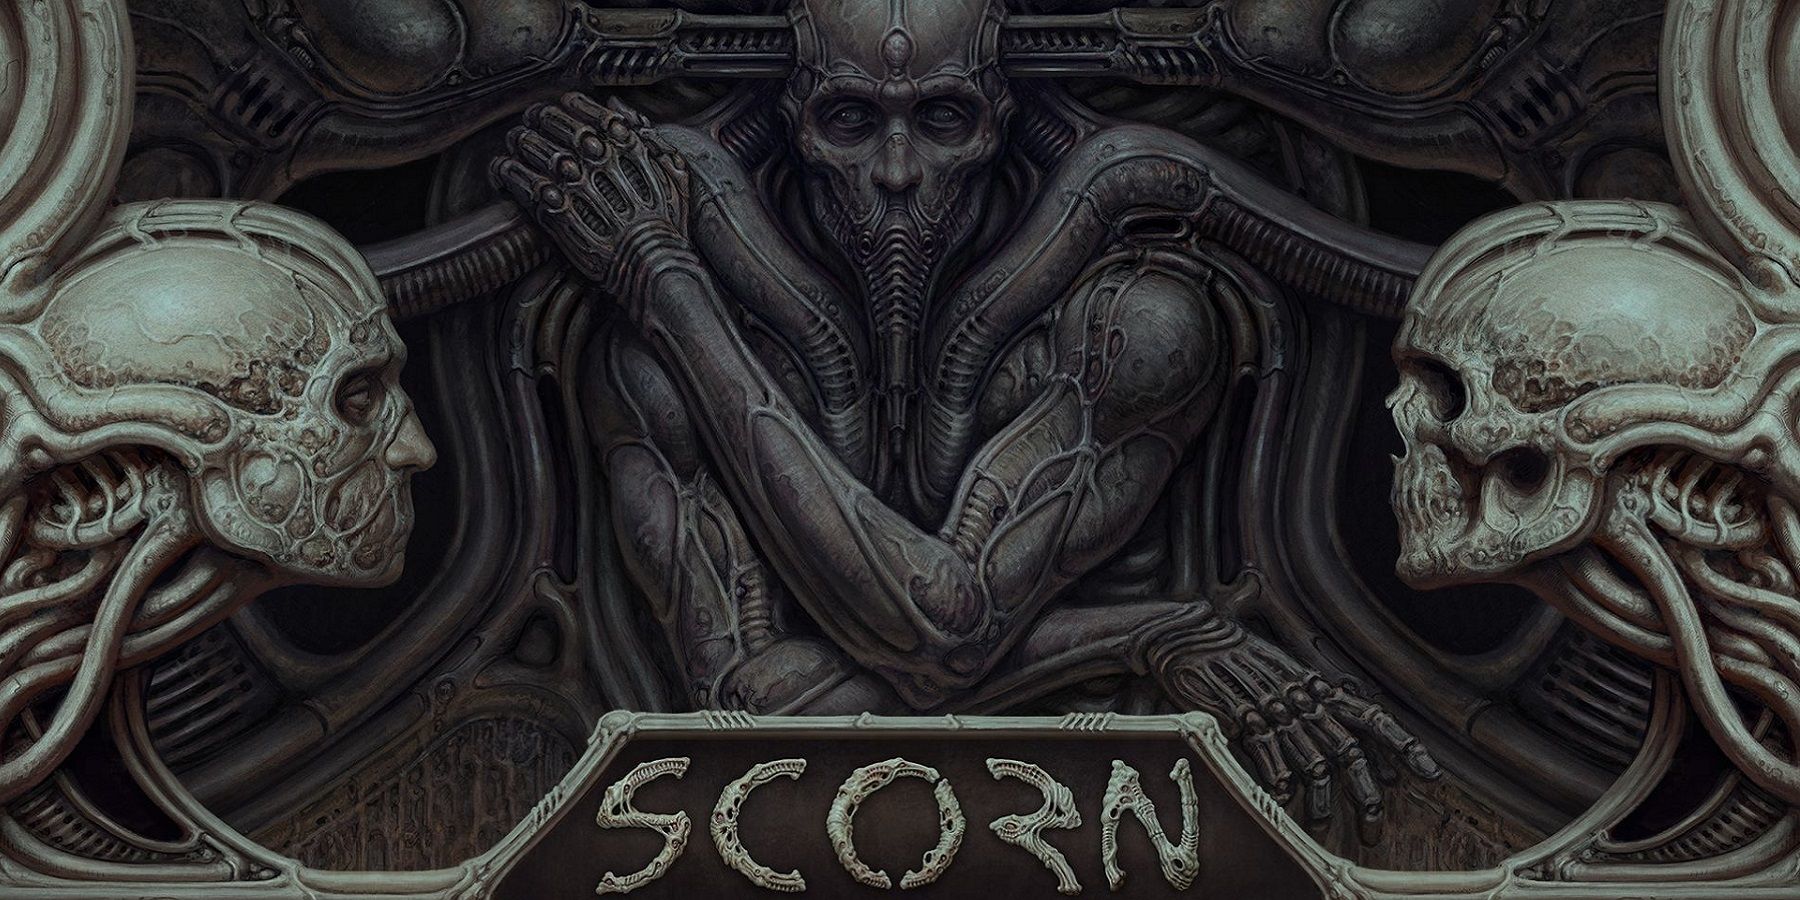 The Scorn logo with H.R. Giger inspired artwork.